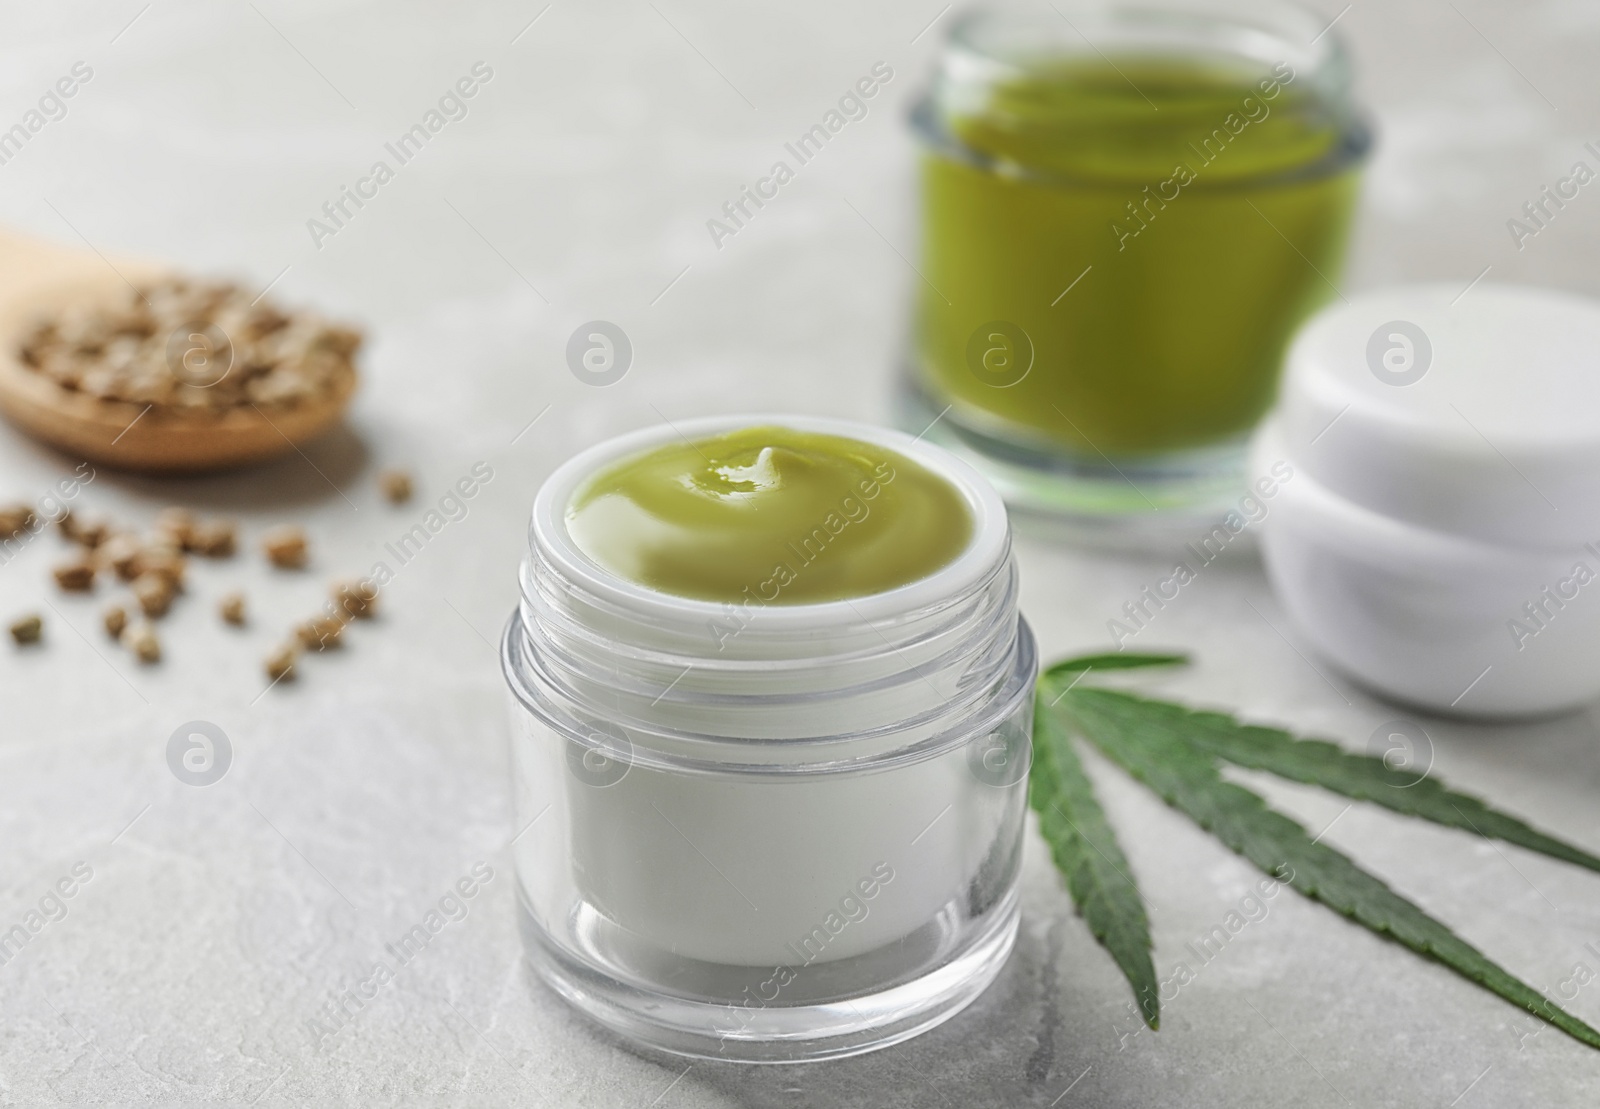 Photo of Jars of hemp cream and seeds on grey table. Organic cosmetics